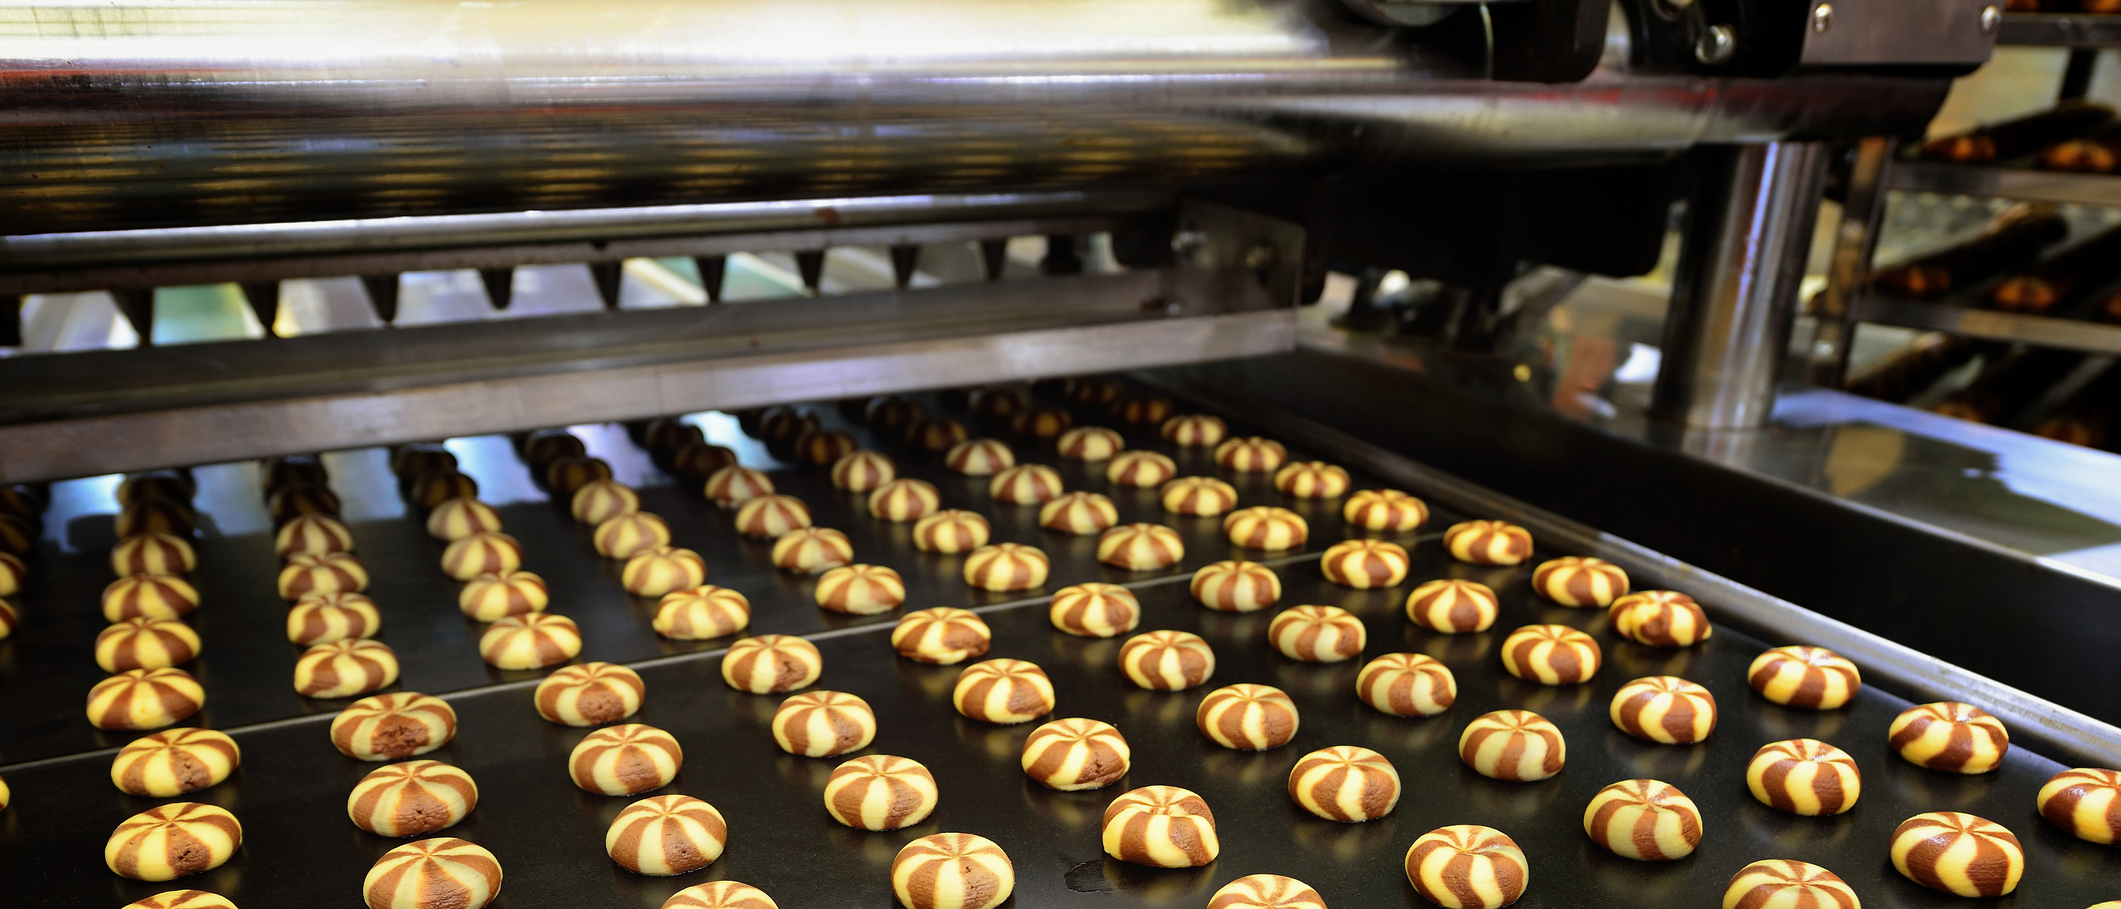 cookies on a conveyor belt in a factory.